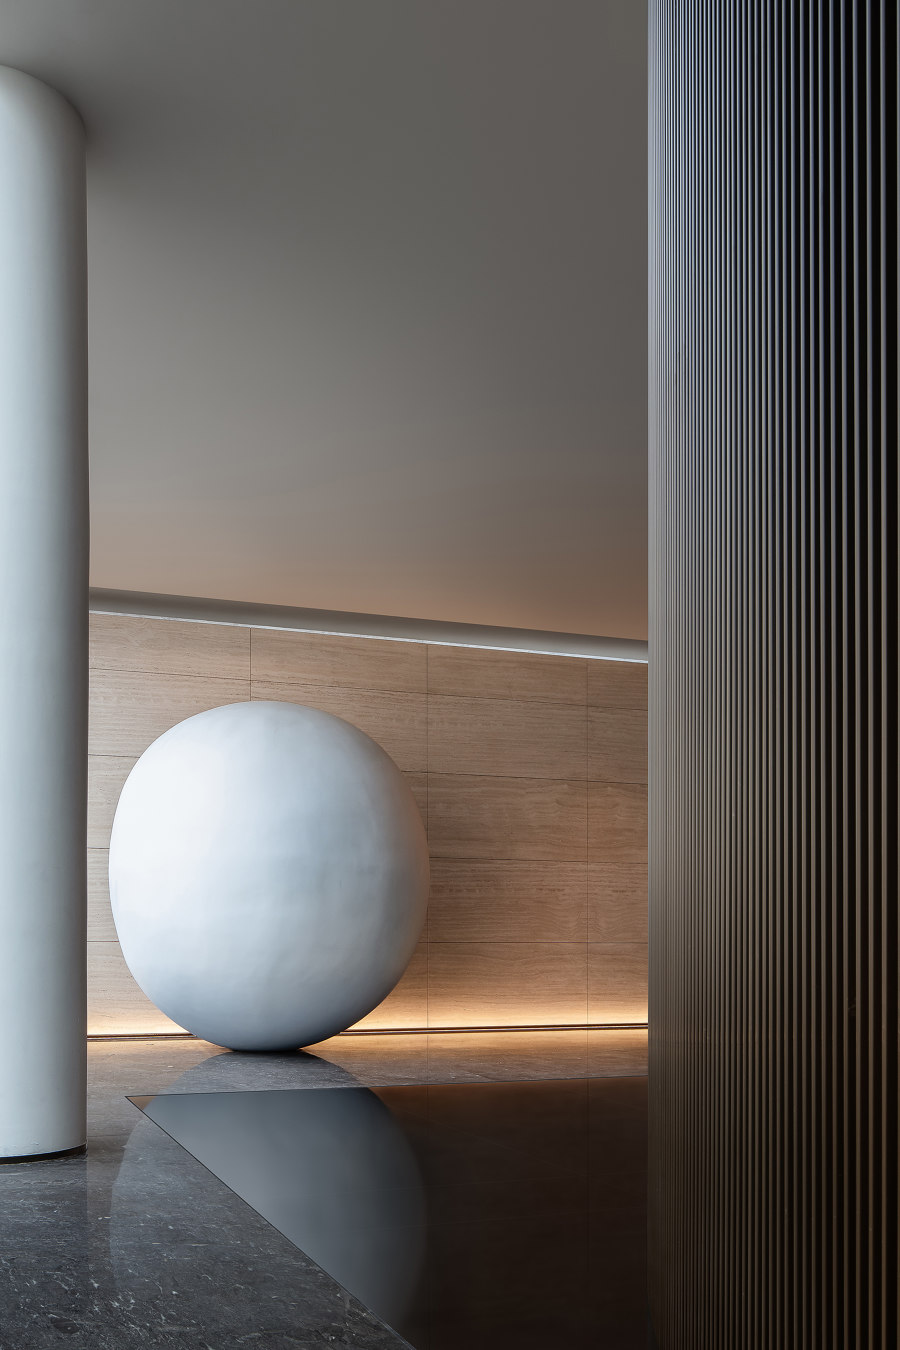 Sunac • Grand Milestone Modern Art Center von CCD/Cheng Chung Design | Museen